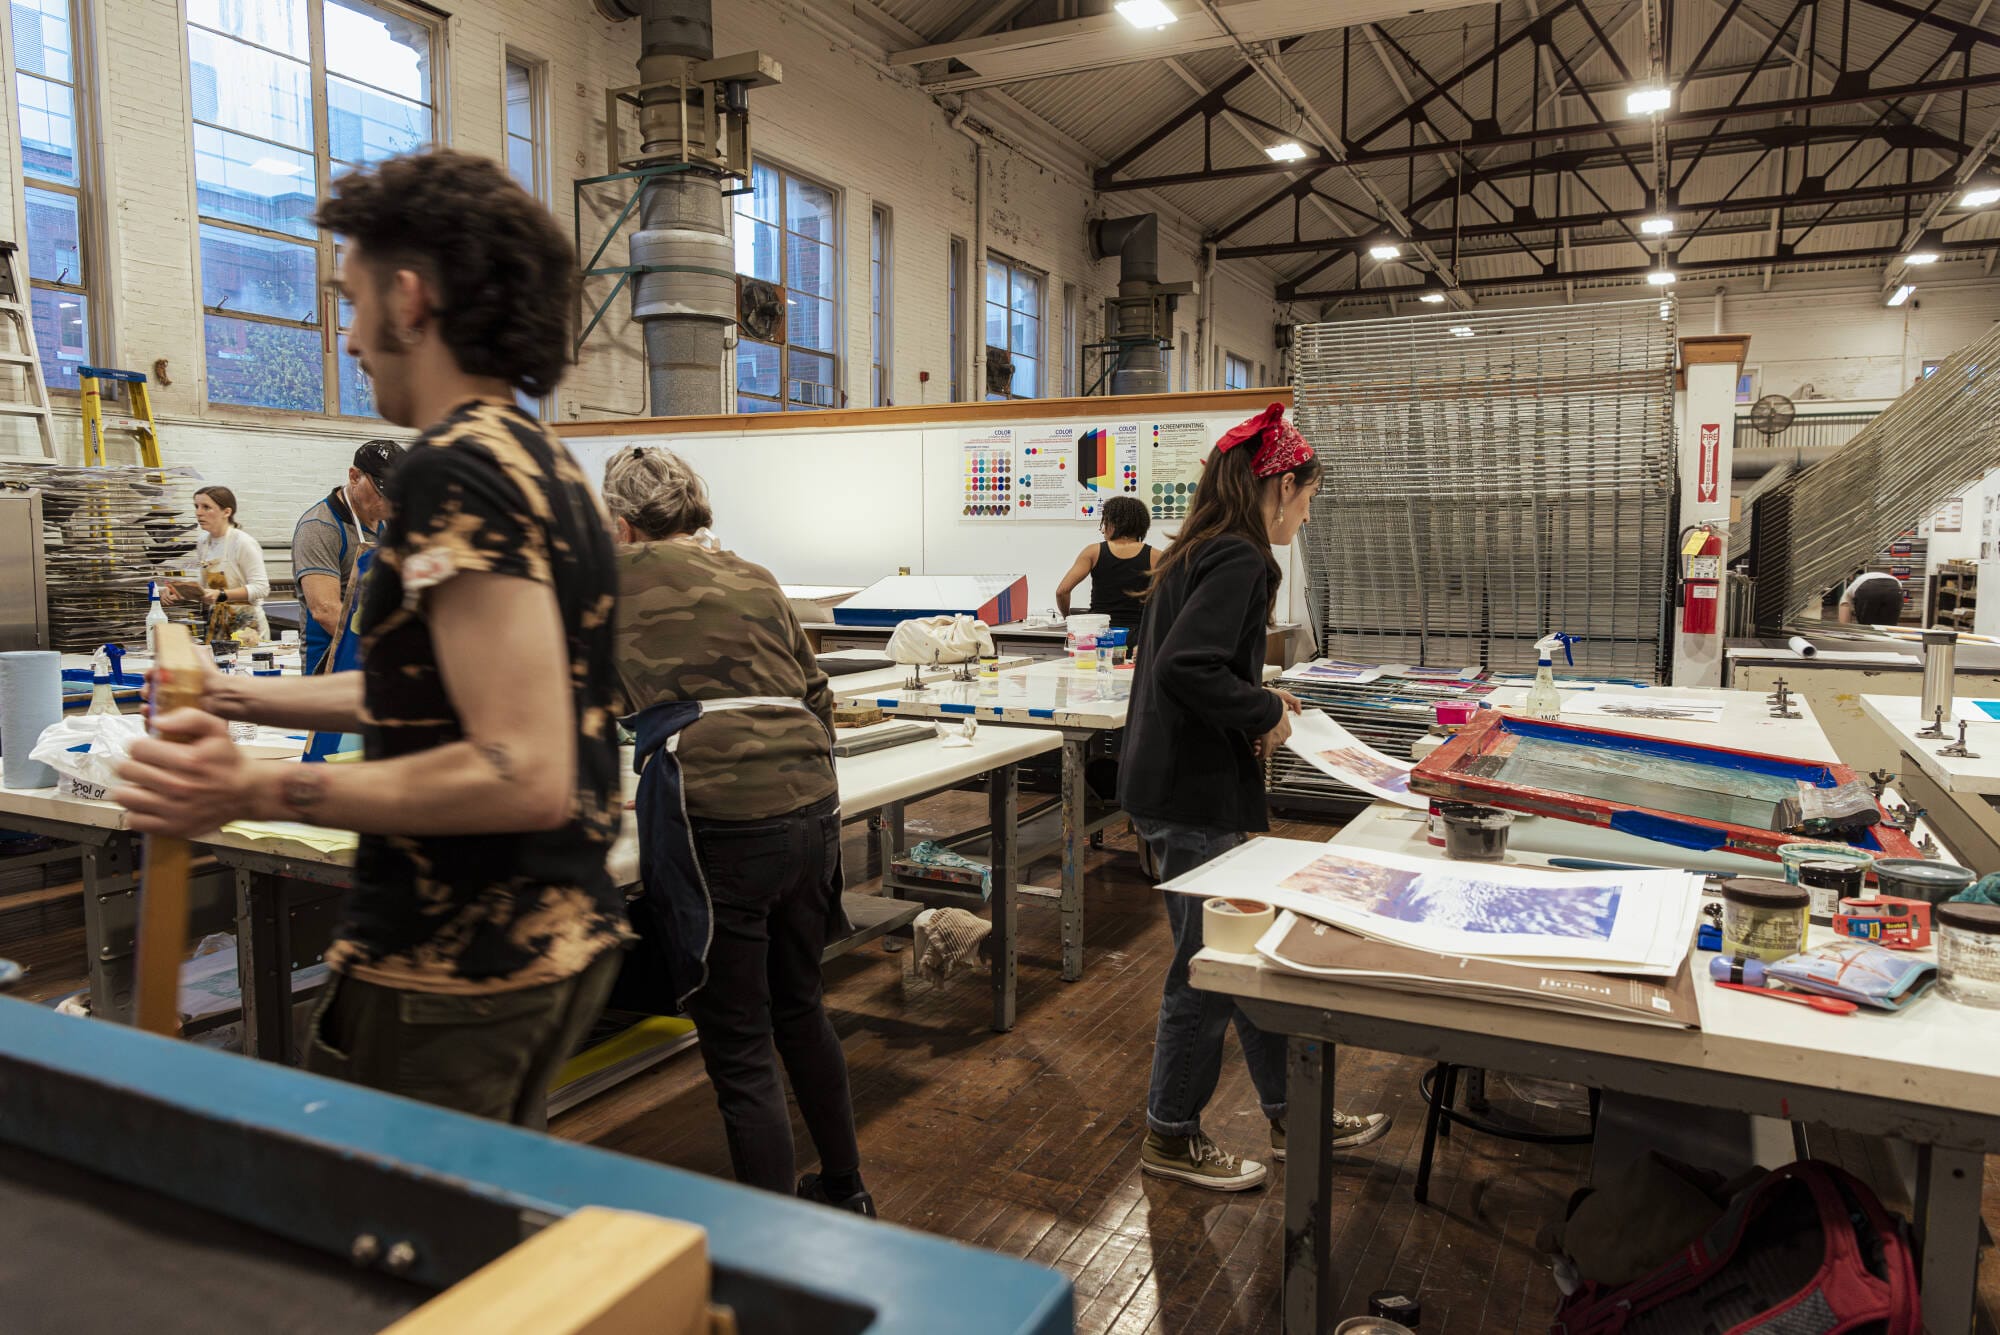 Students working in the Silkscreening area of MassArt's Print Studio/Print Shop